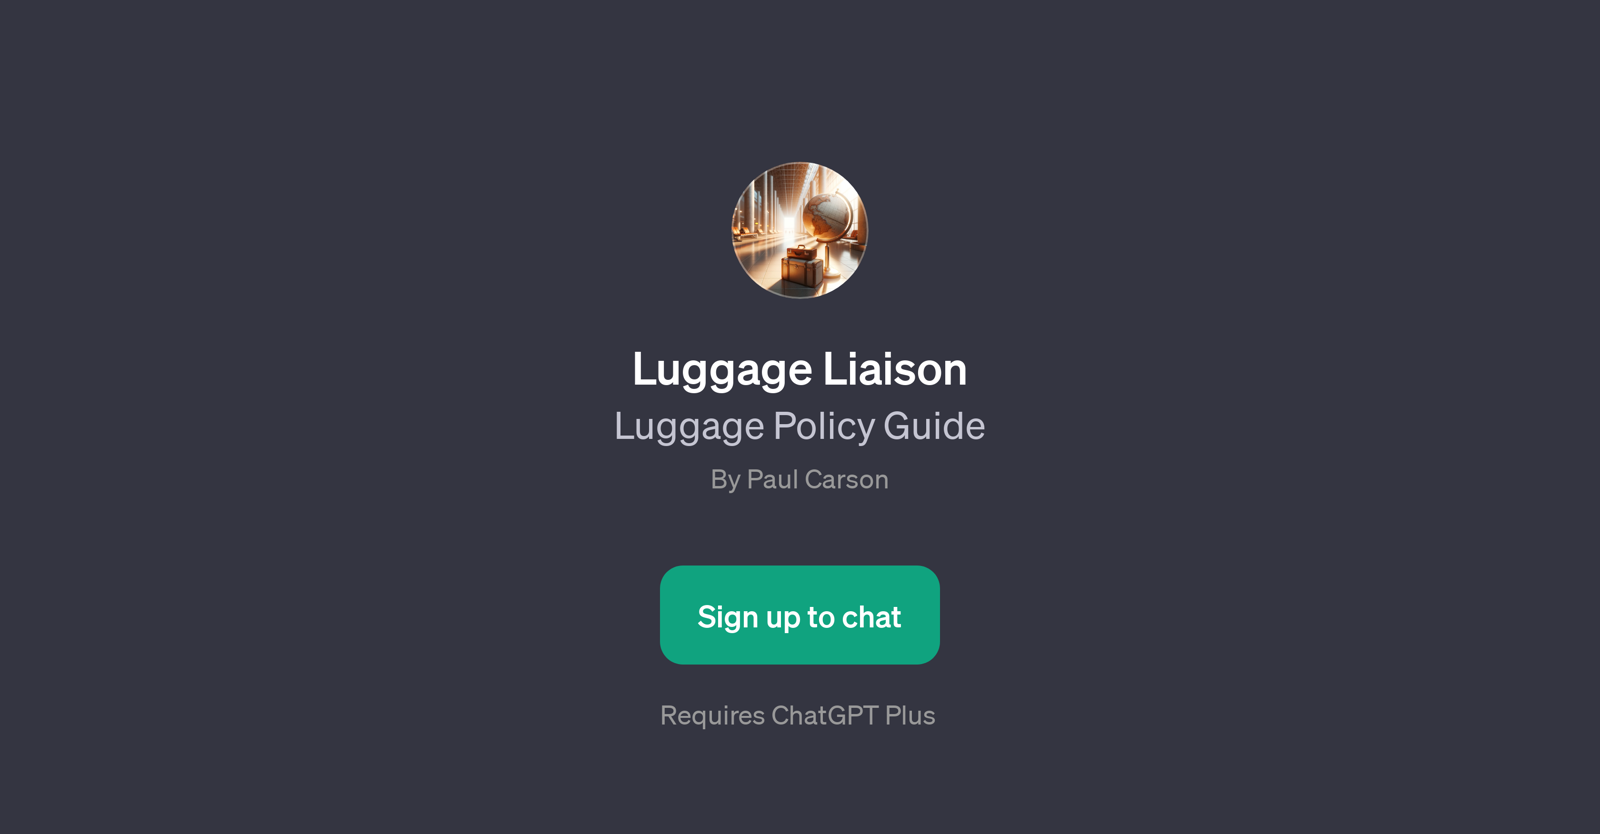 Luggage Liaison website